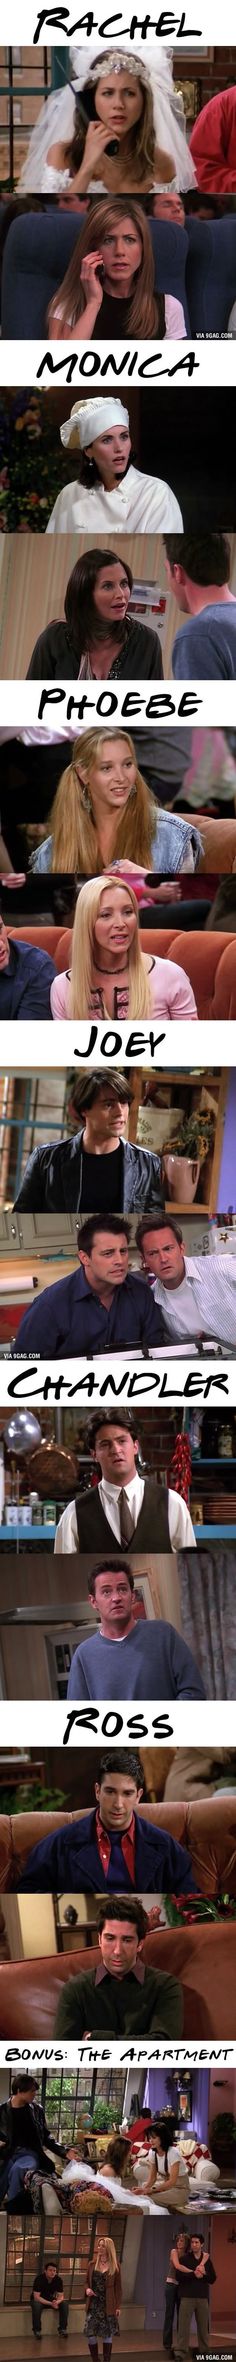 The Cast Of "Friends" On The First Episode (1994) Vs. The Last Episode (2004) Harry Potter, Humour, Fandom, Man, Fotos, Meme, Ross Geller